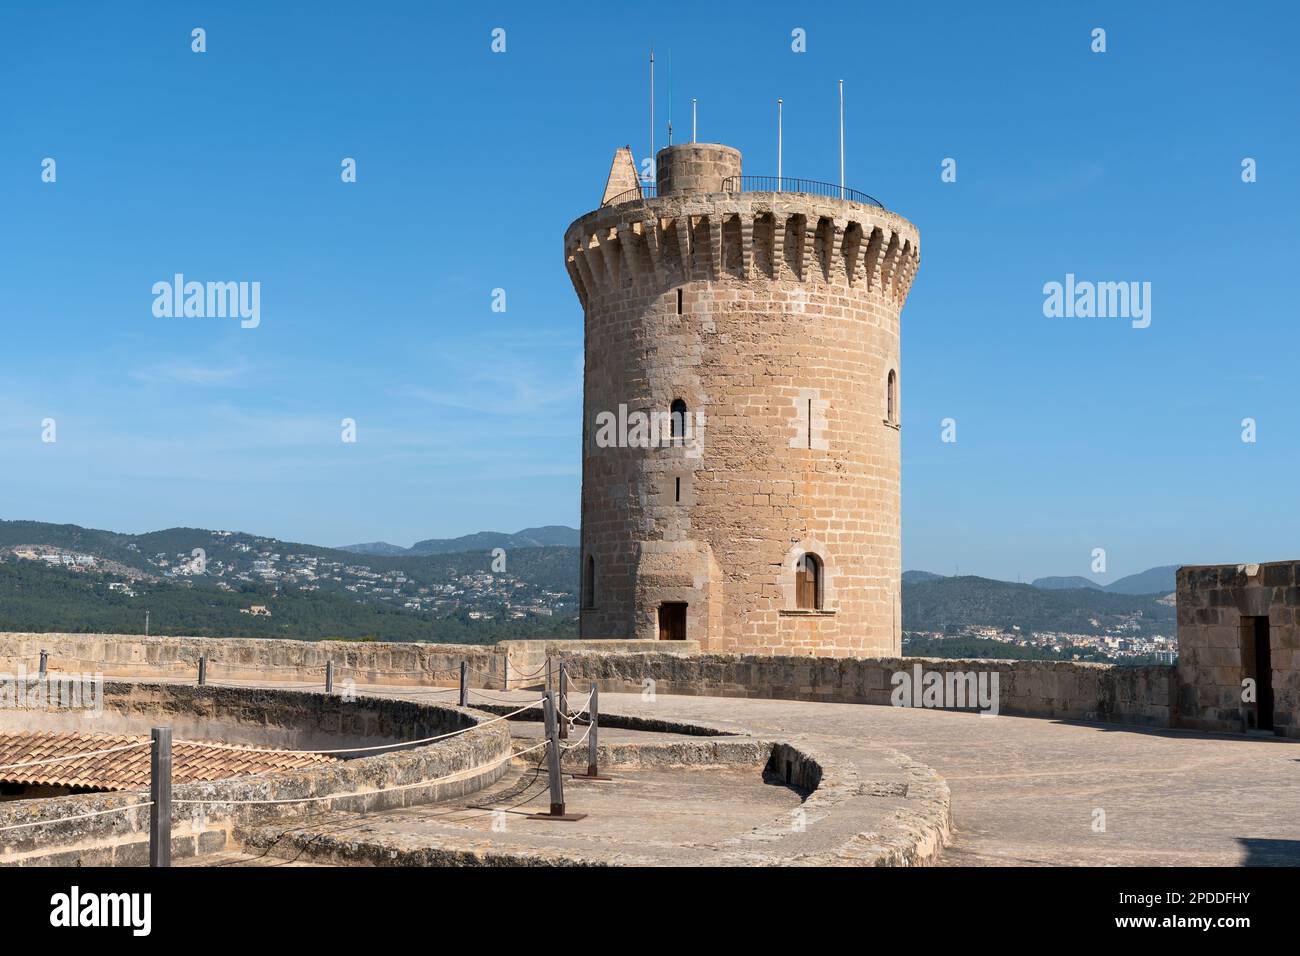 Inside view of the Bellver Castle in Palma de Mallorca - Spain. Stock Photo